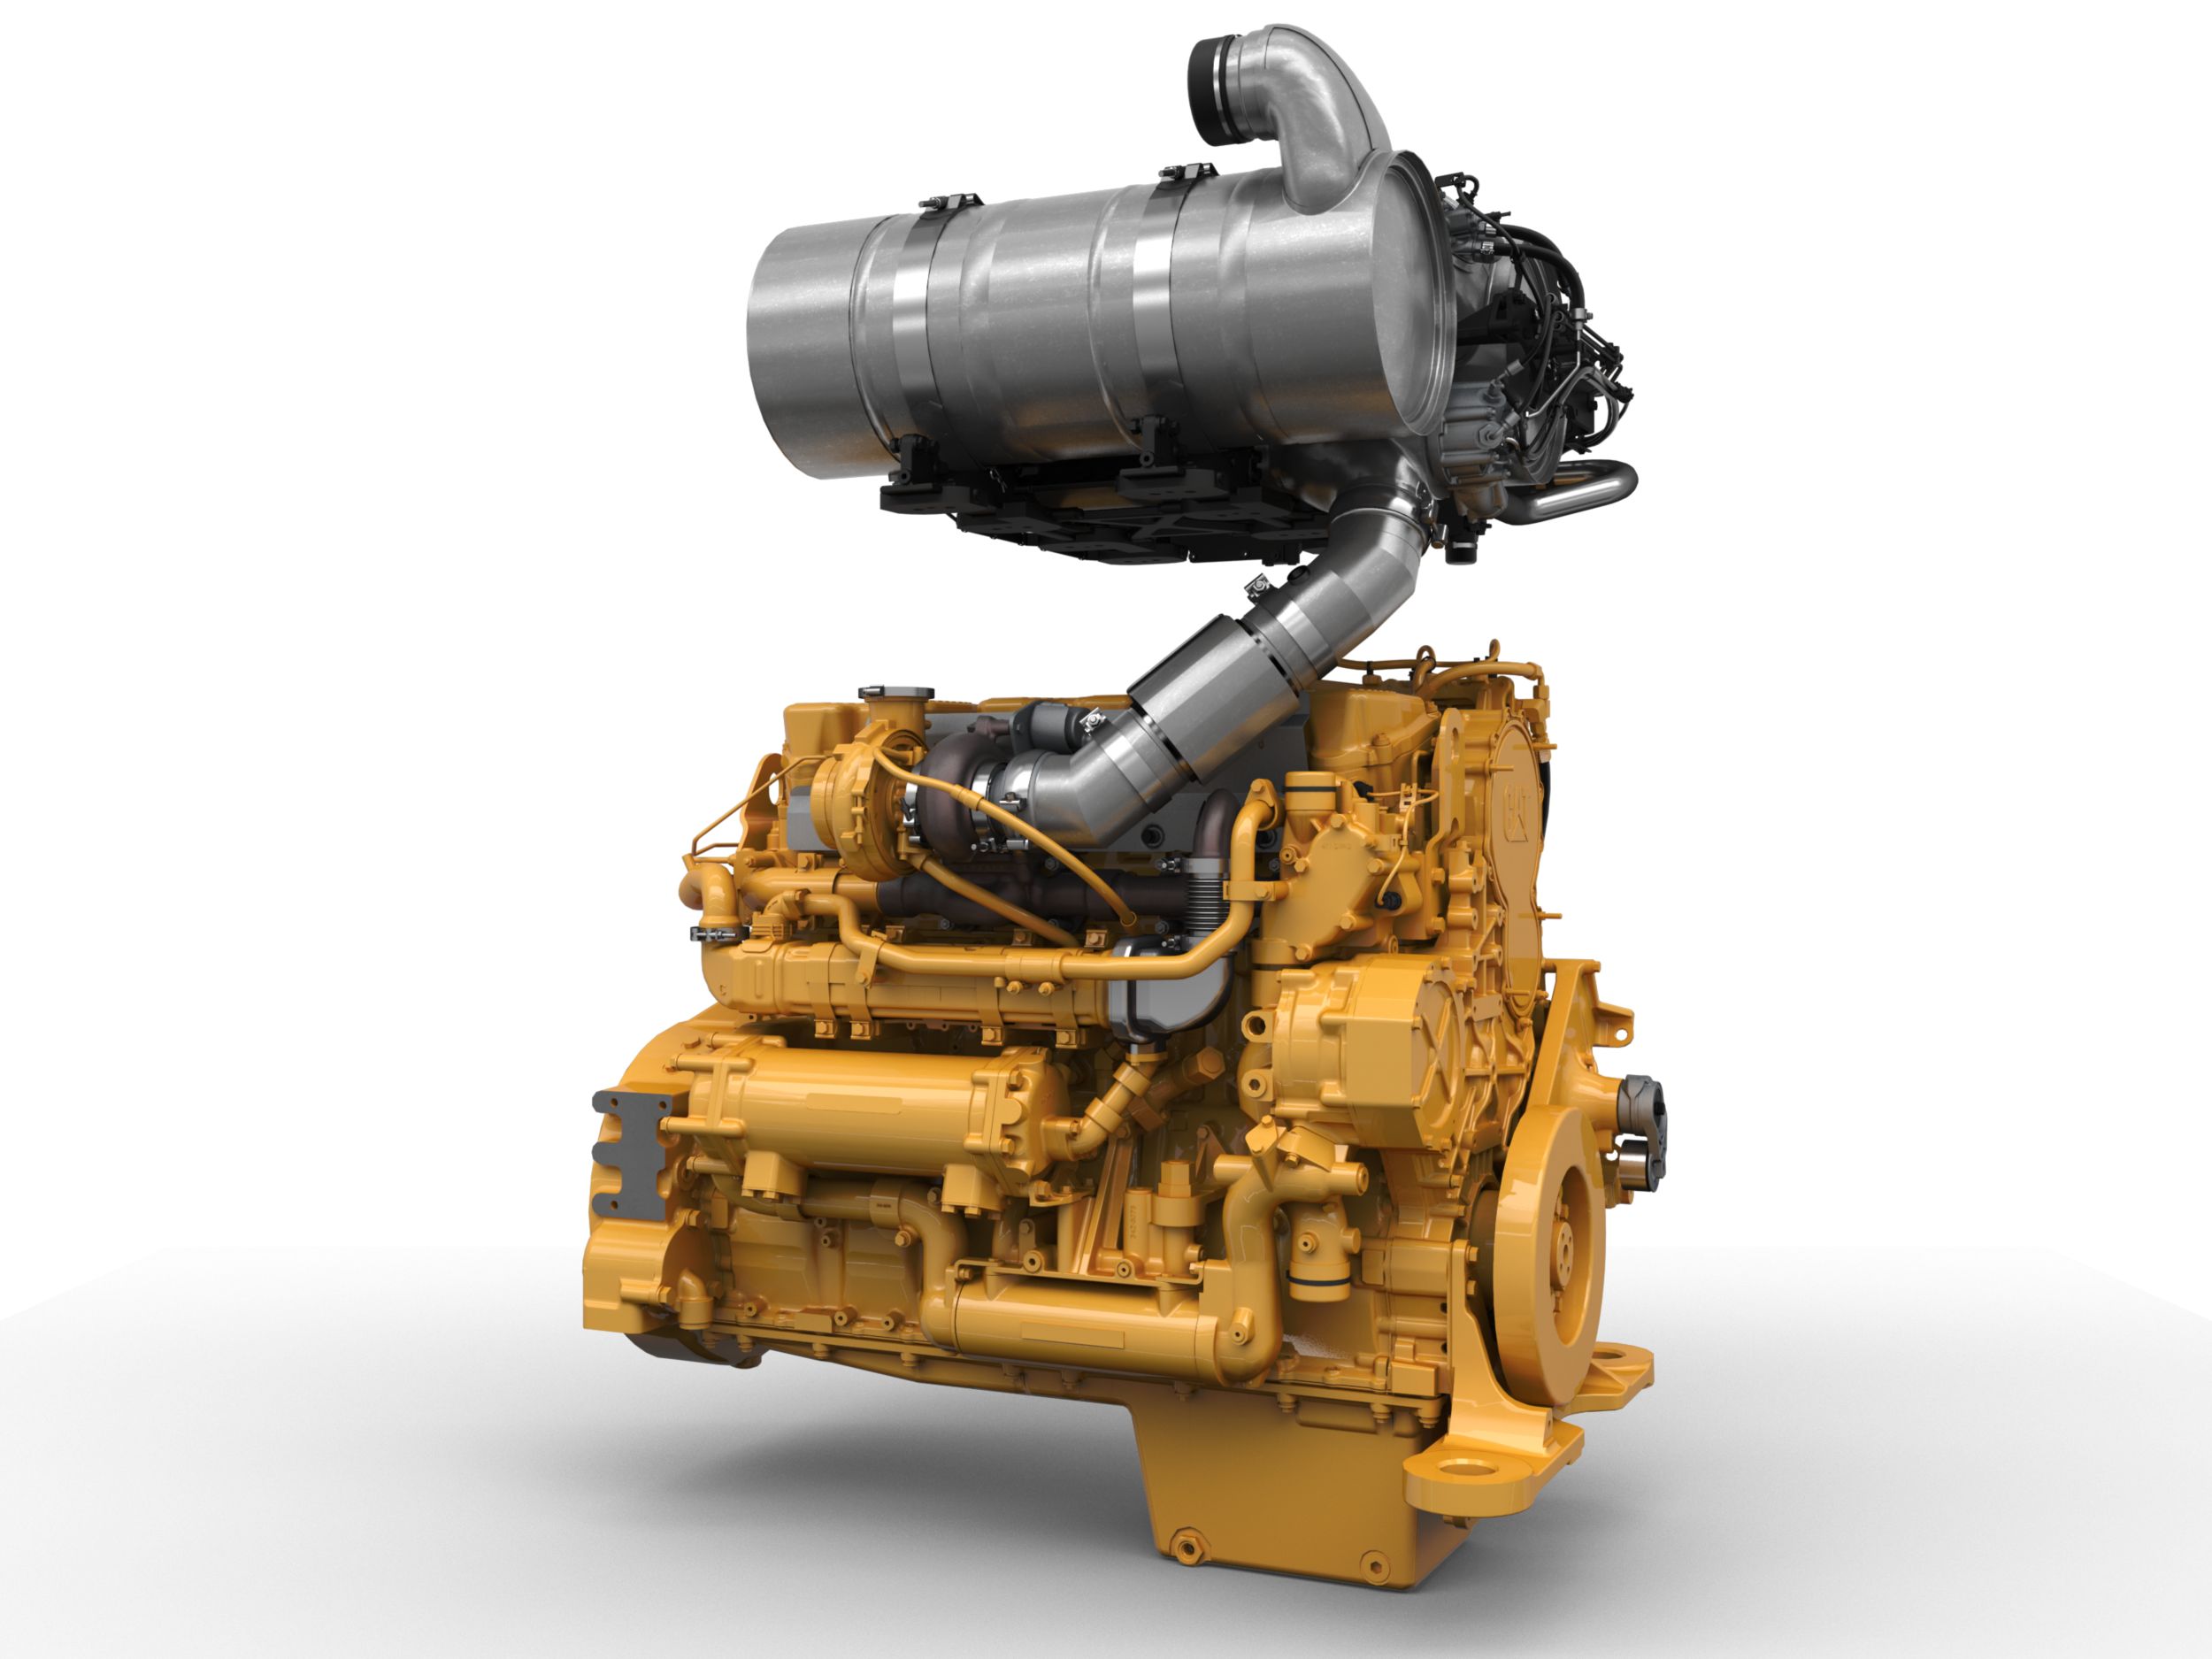 C15 ACERT™ Tier 4 Final Petroleum Engine Well Servicing Engines